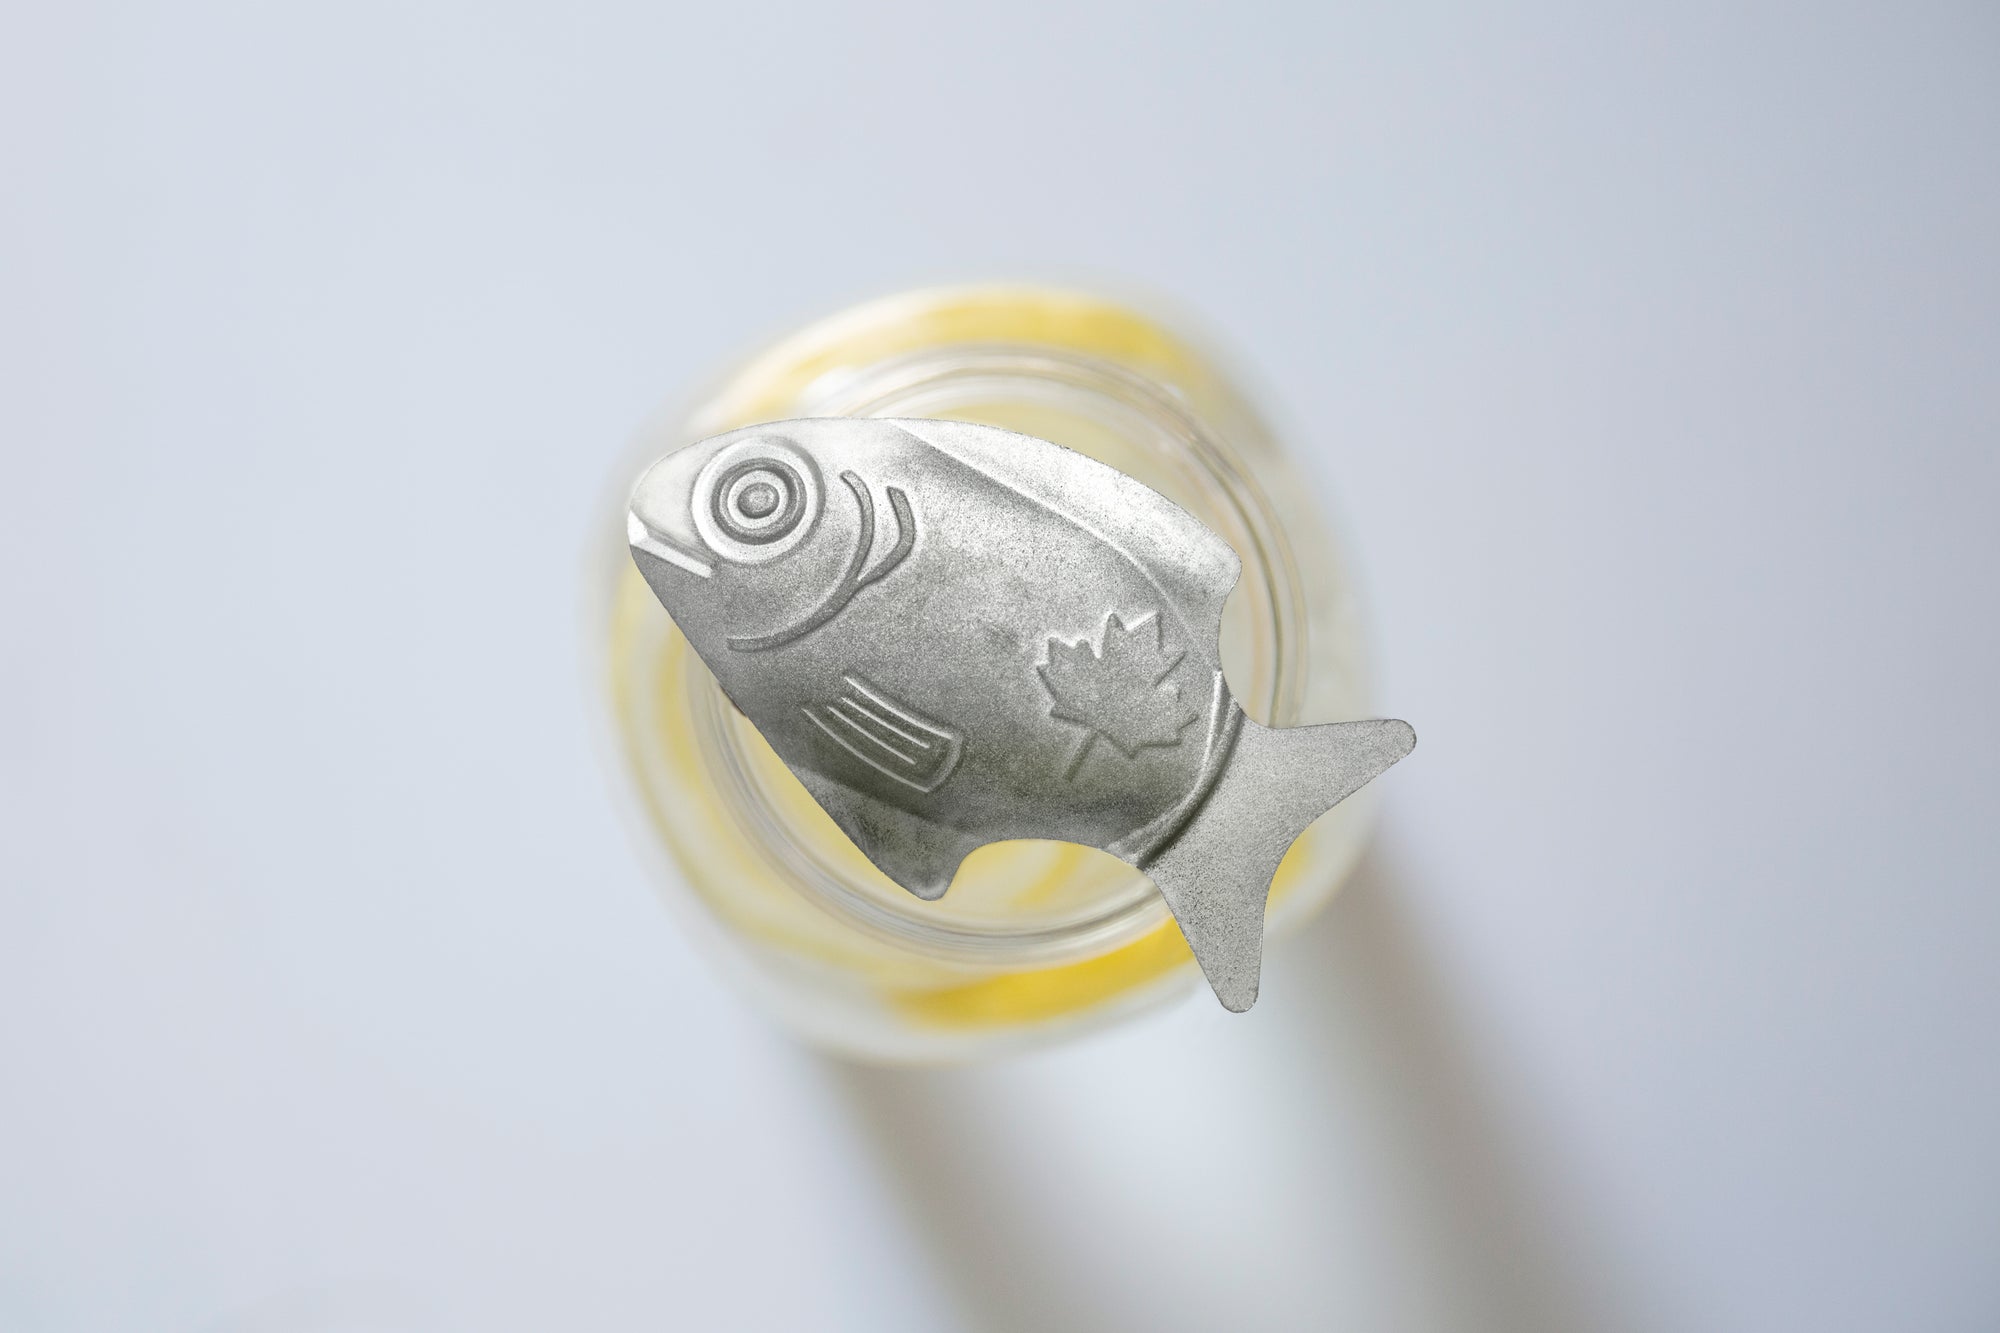 Pediatric Hematologist uses Lucky Iron Fish in Clinics